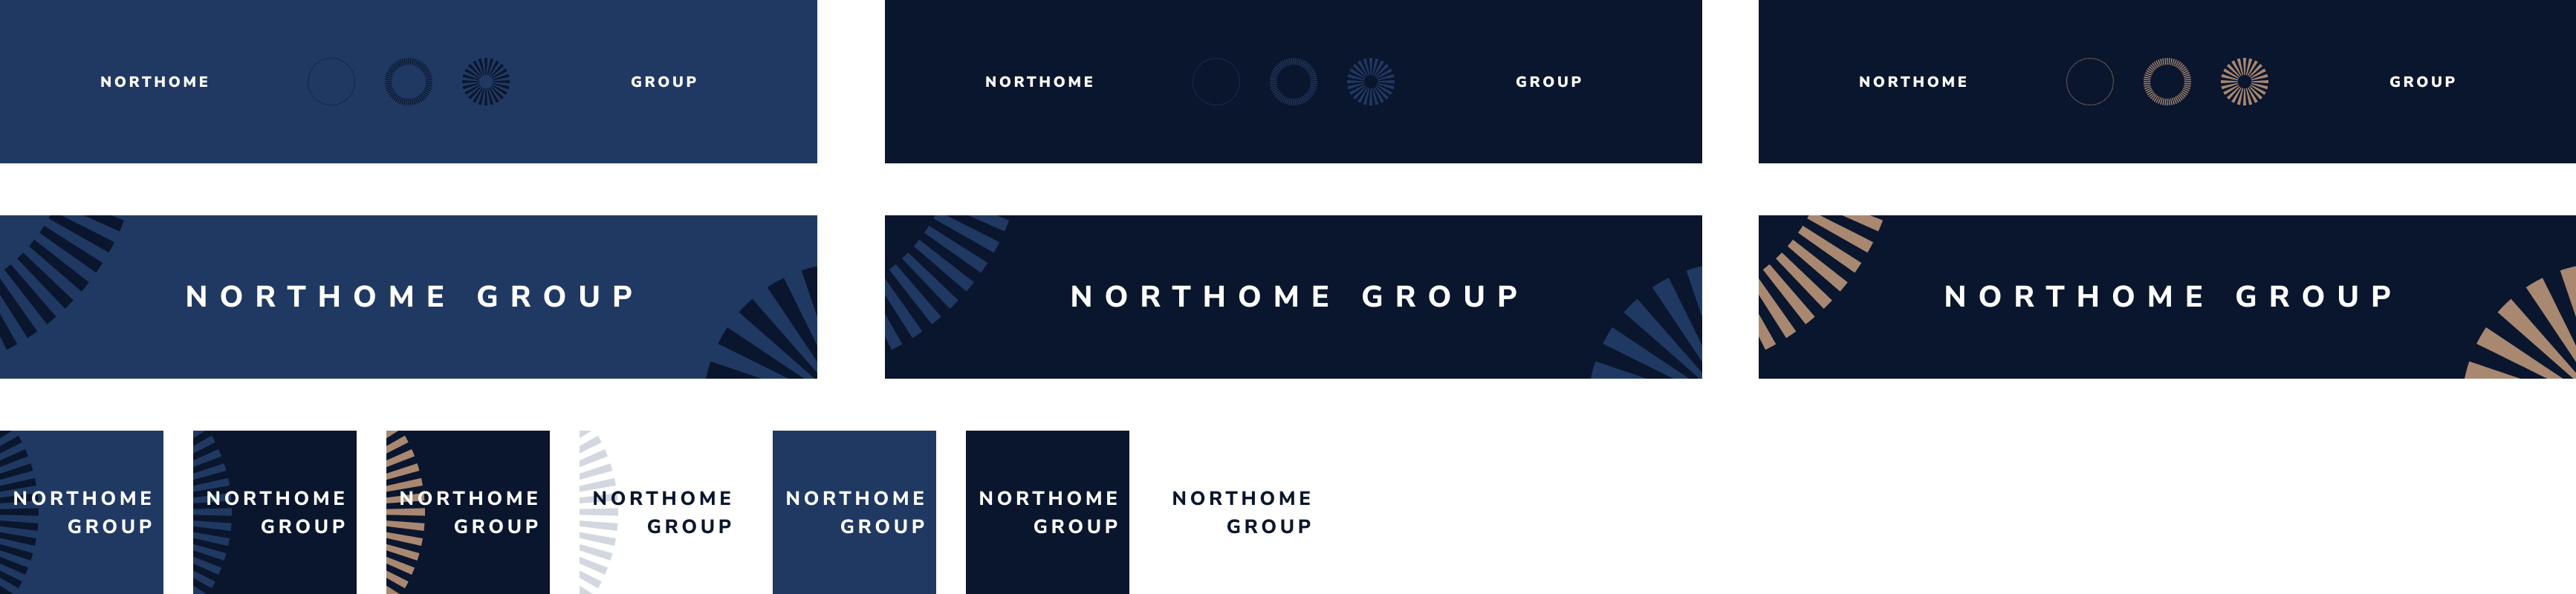 northomegroup-banner